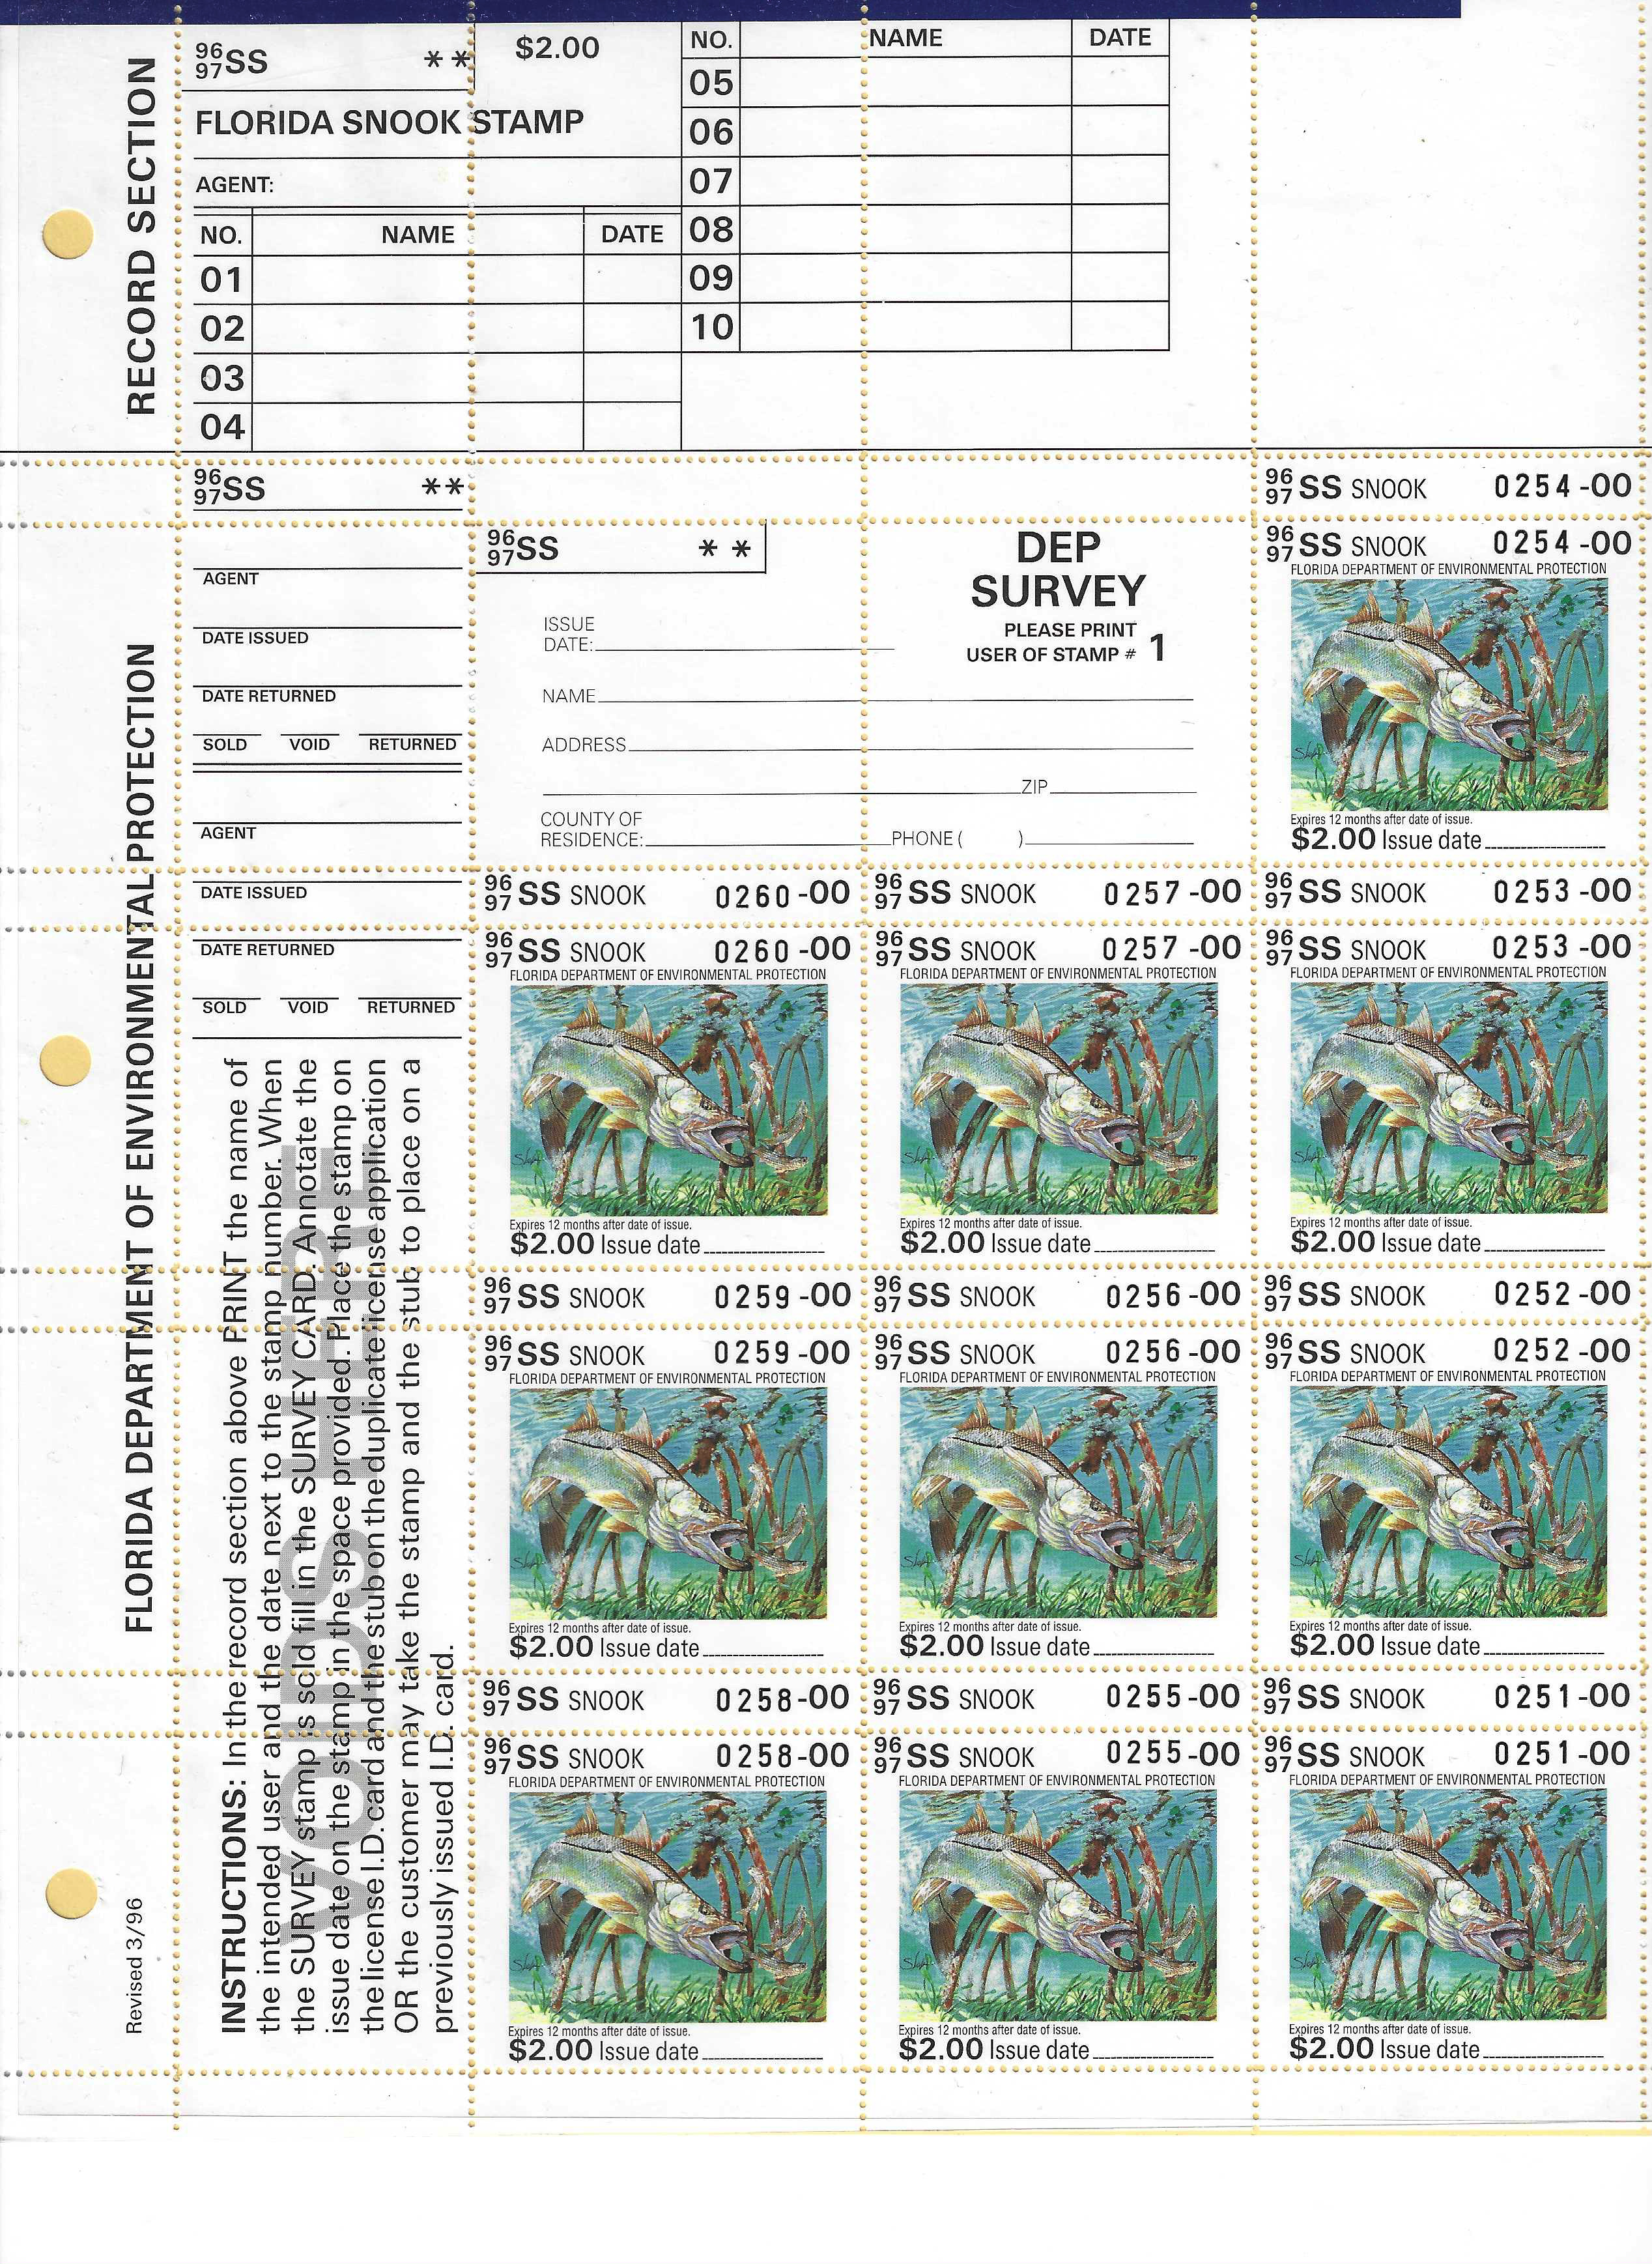 FL snook FL-SK8 1996 $2.00 MNH VF, complete sheet/10 w/ all tabs present